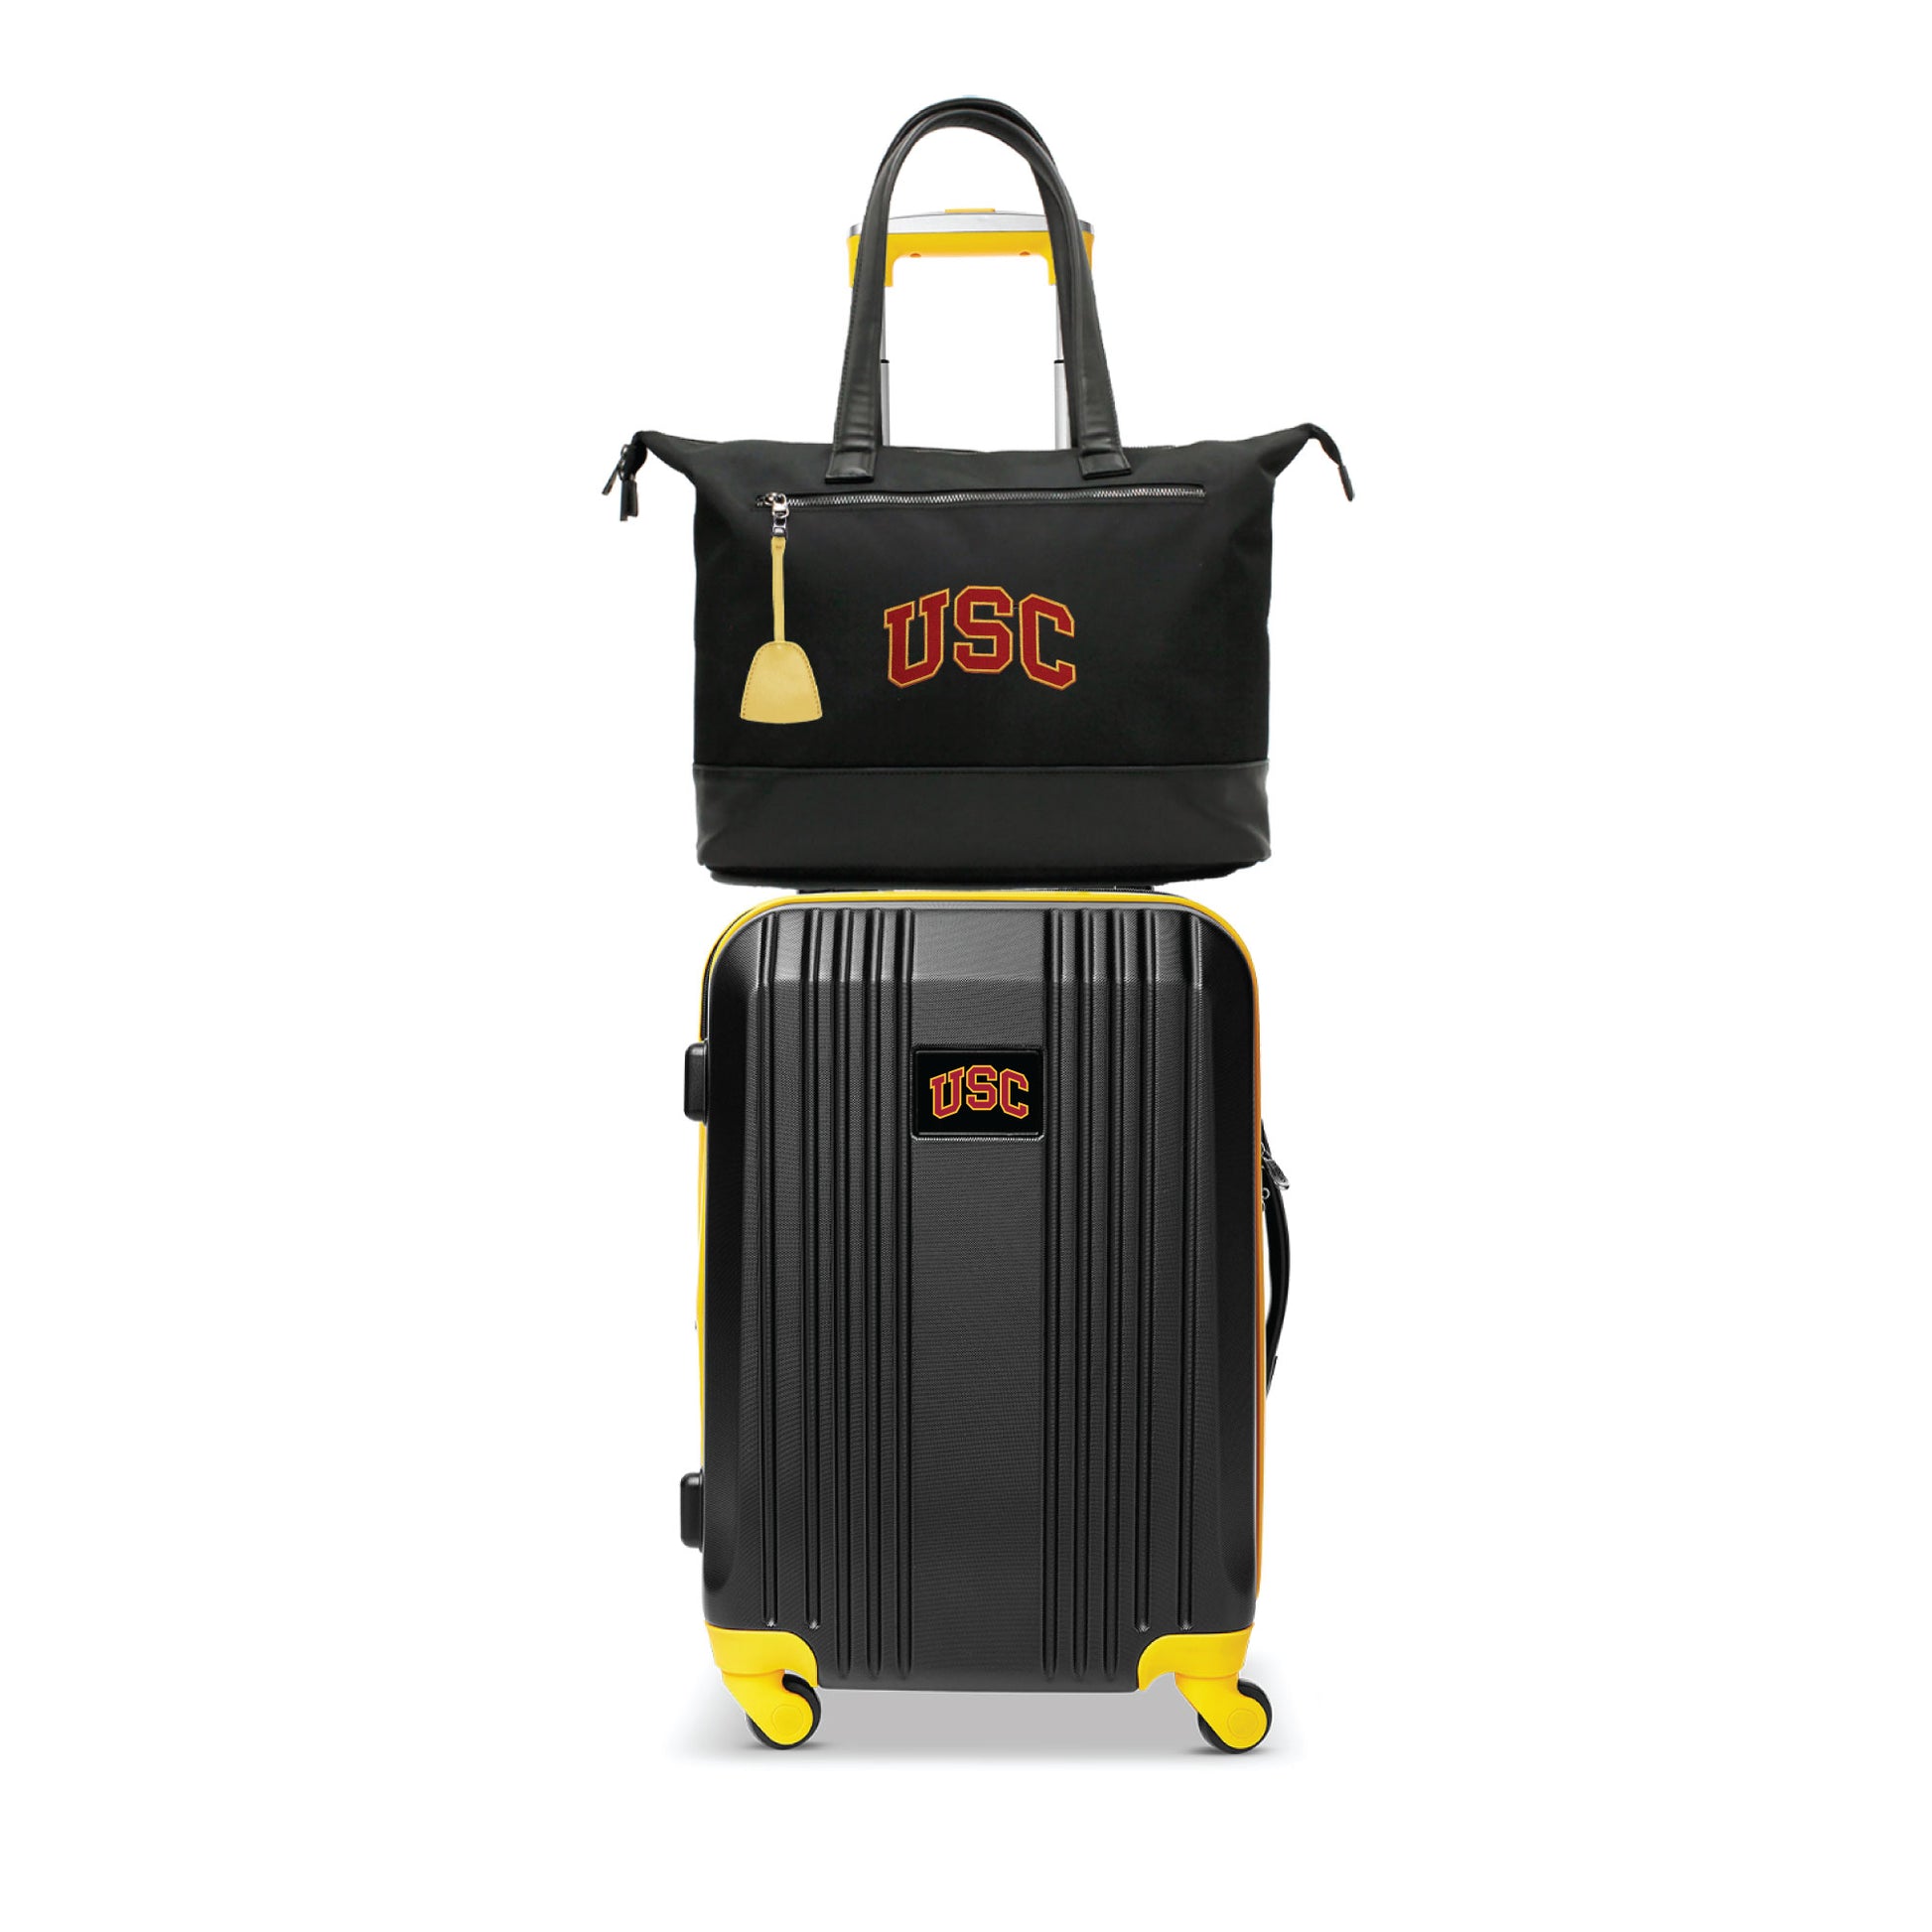 Southern Cal Trojans Premium Laptop Tote Bag and Luggage Set